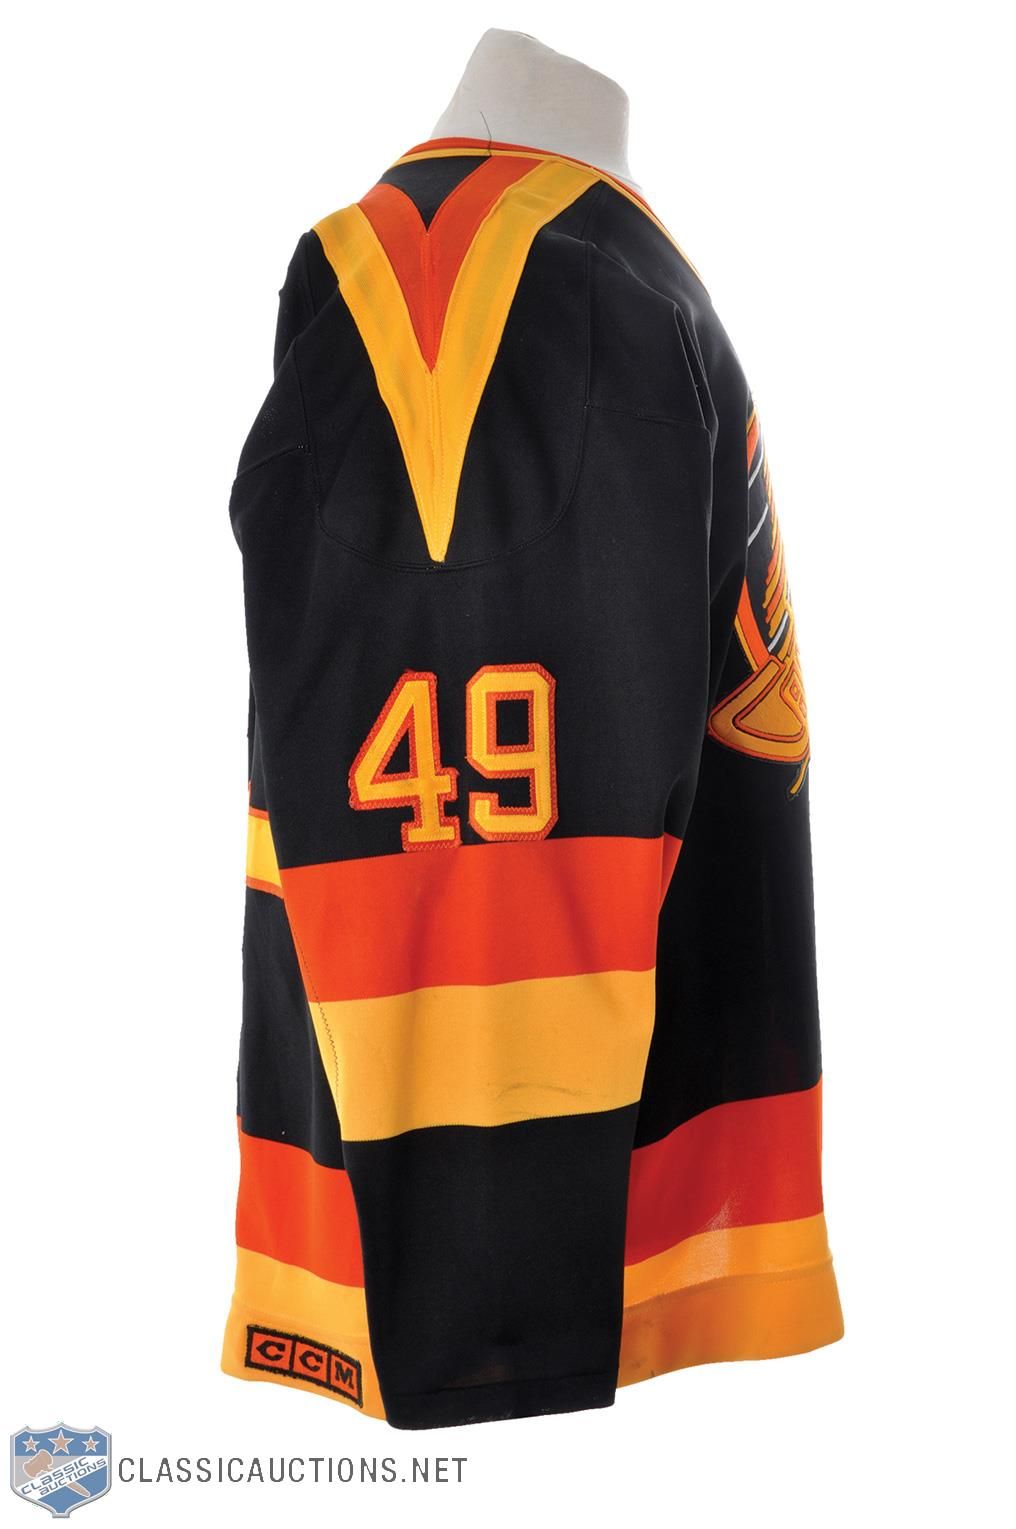 NHL Vancouver Canucks 1988-89 uniform and jersey original art